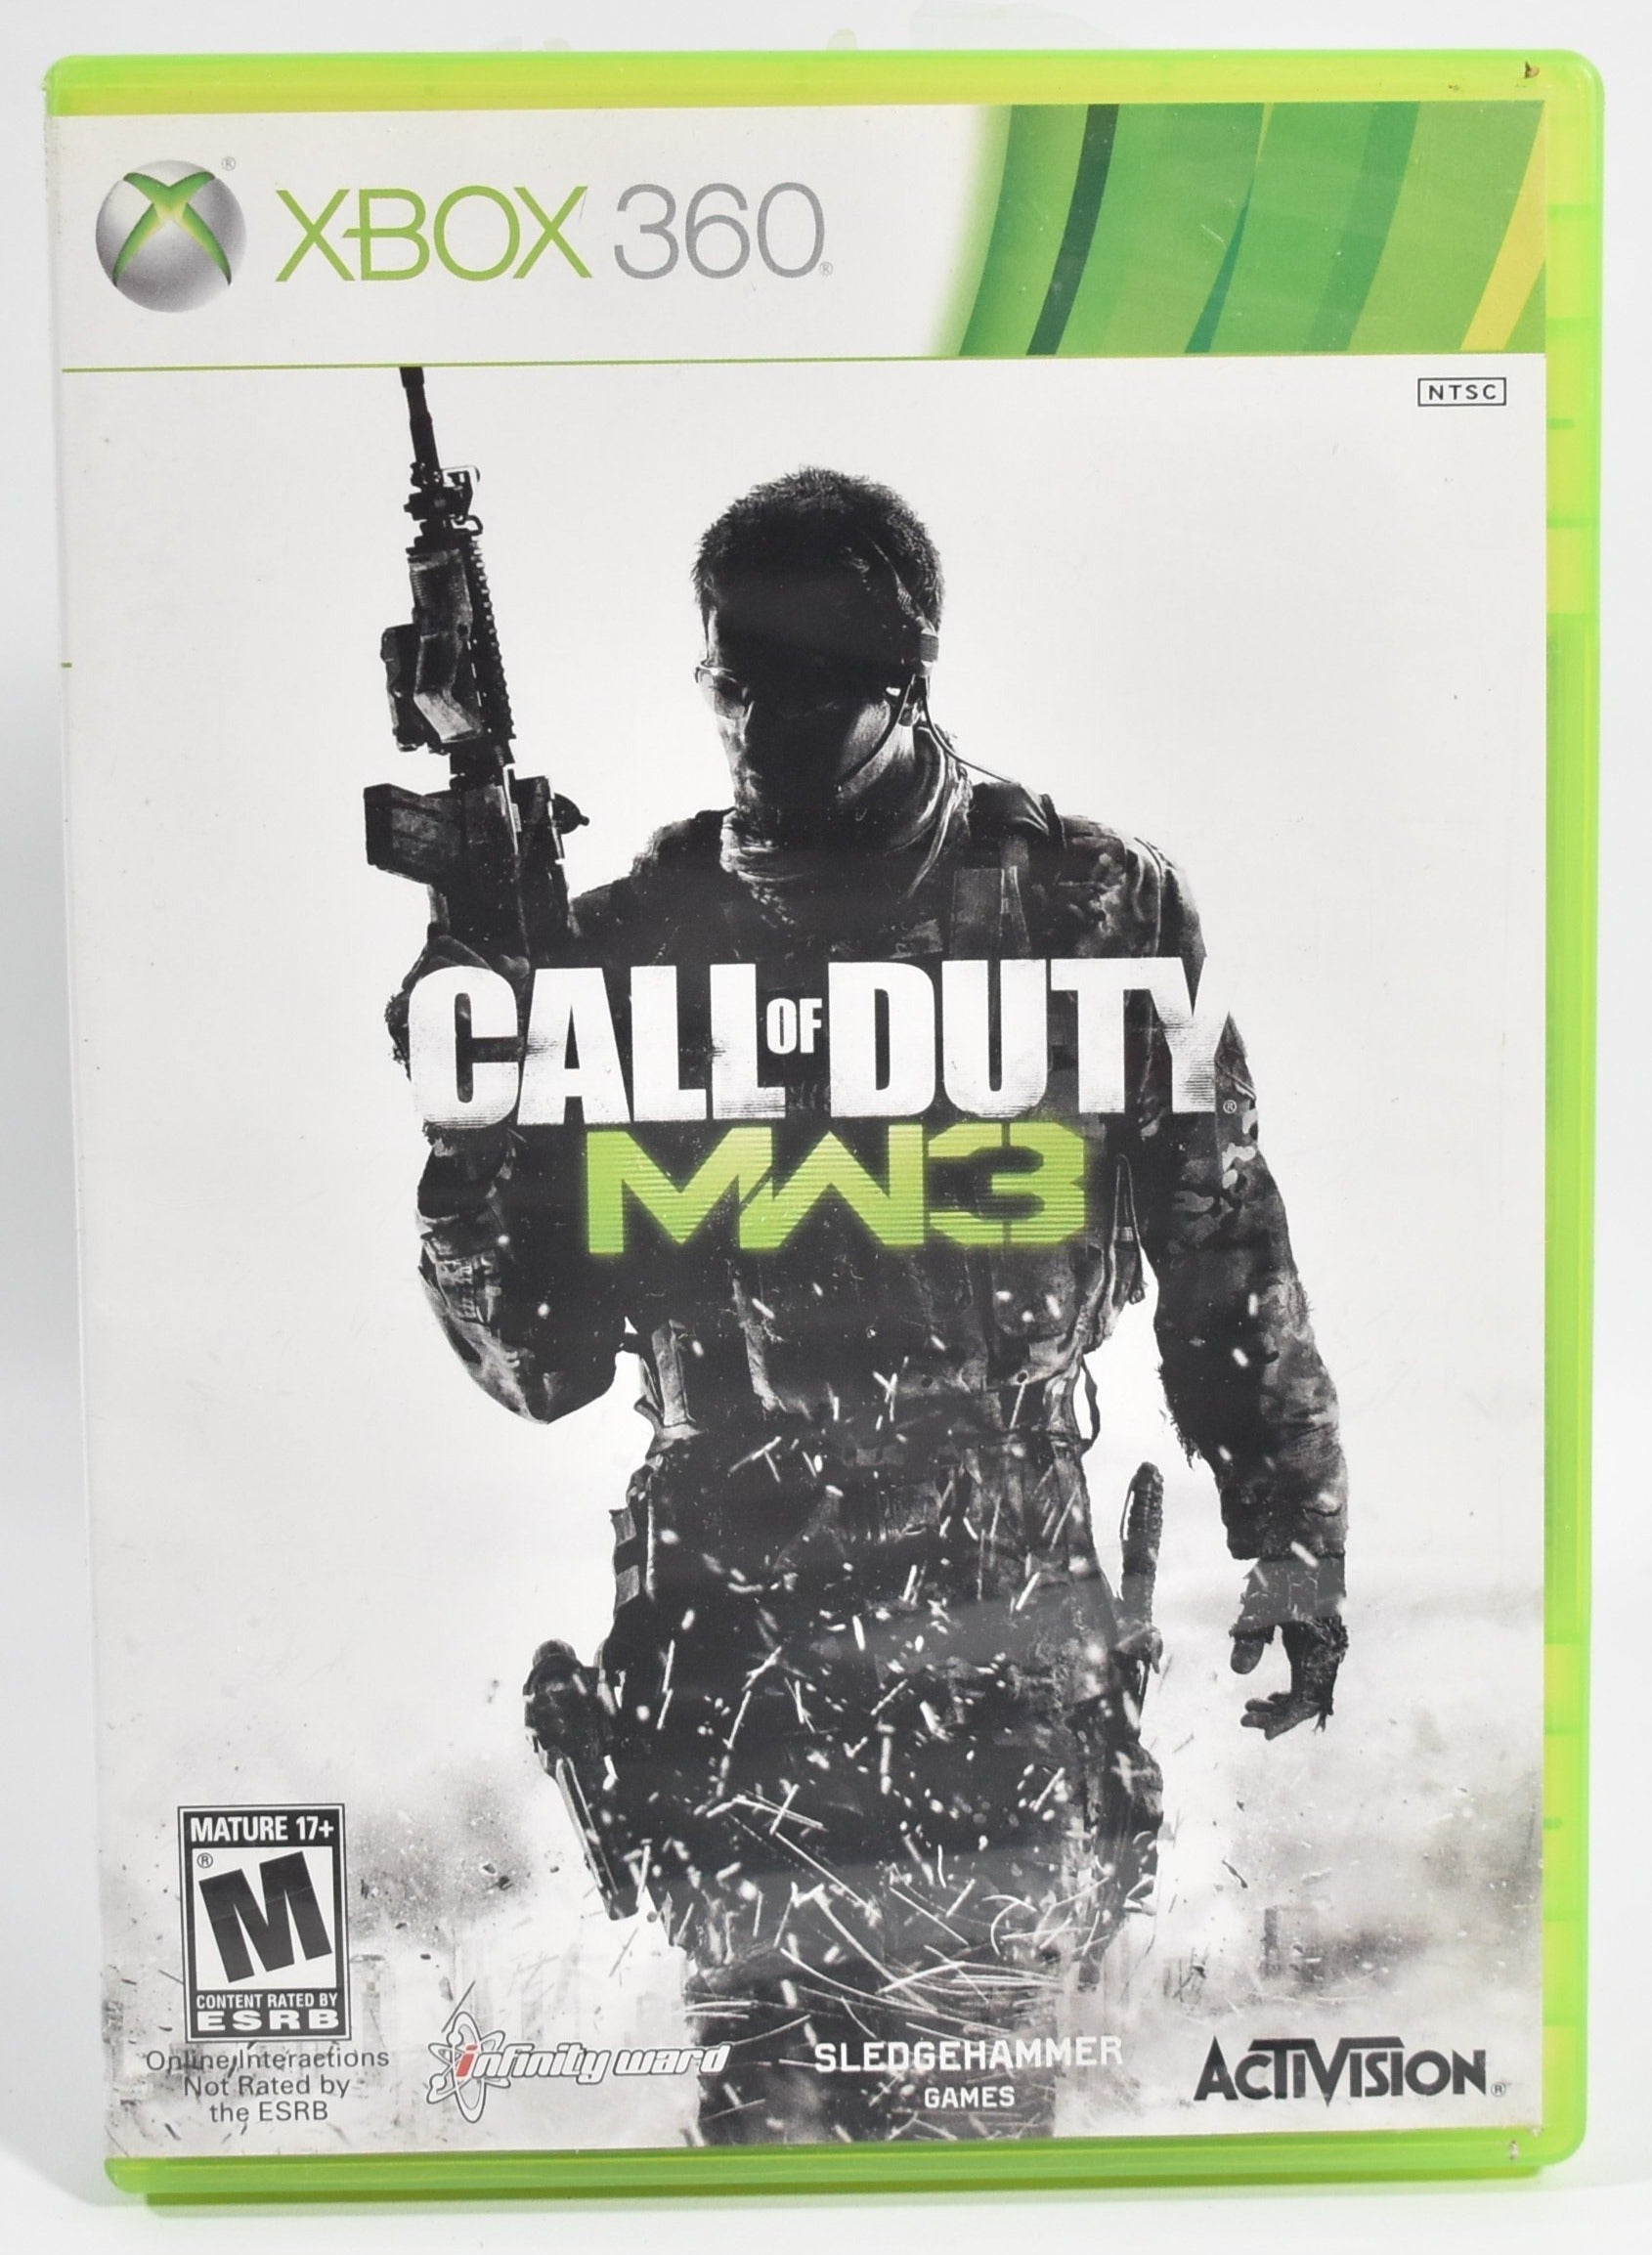 Xbox 360 Video Game Call of duty modern Warfare 3 Used